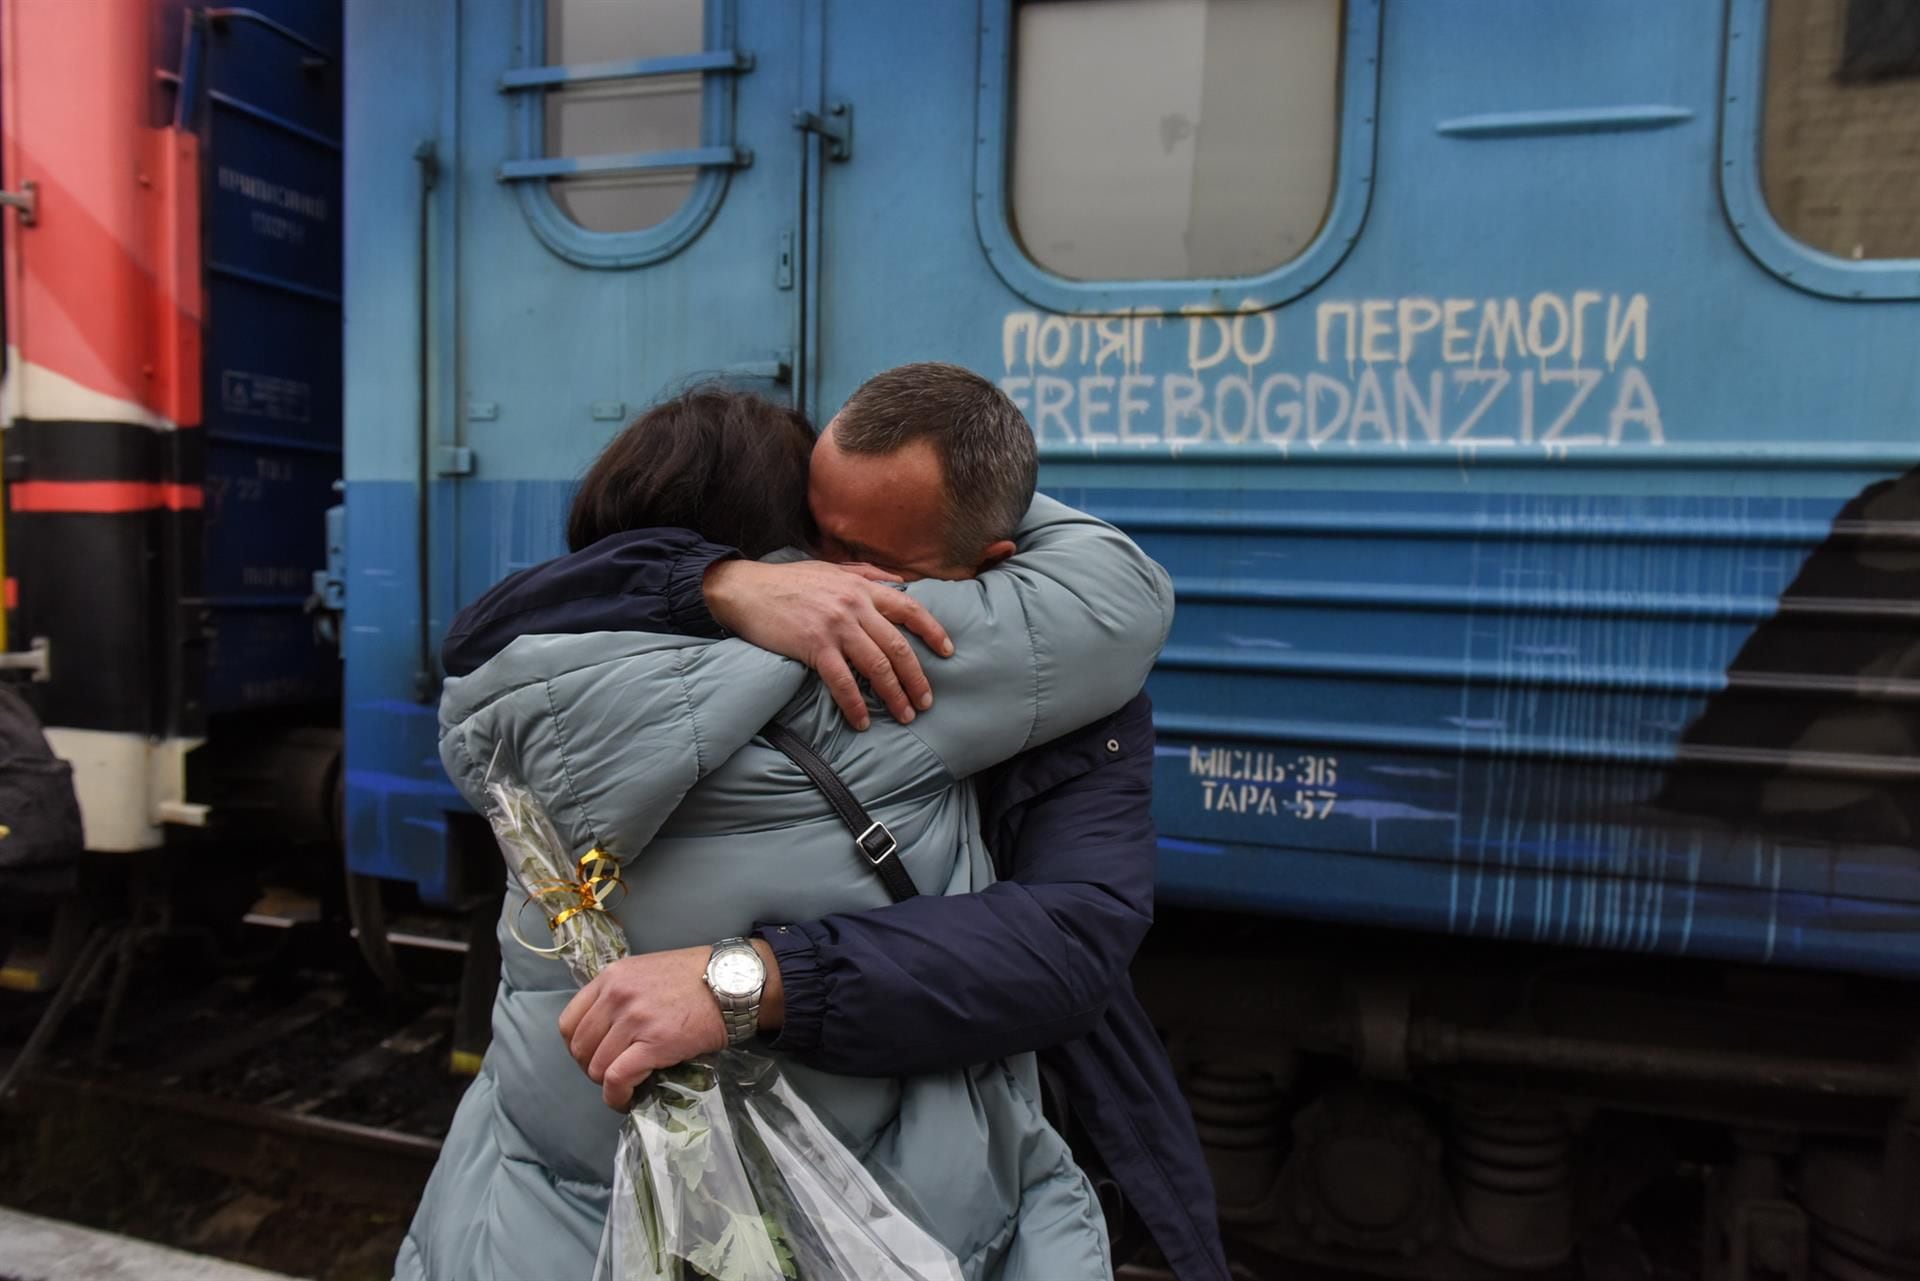 Andriy hugs his wife Olga as they meet again after three months at the Kherson train station, in southern Ukraine, on November 19, 2022. (EFE/EPA/OLEG PETRASYUK).